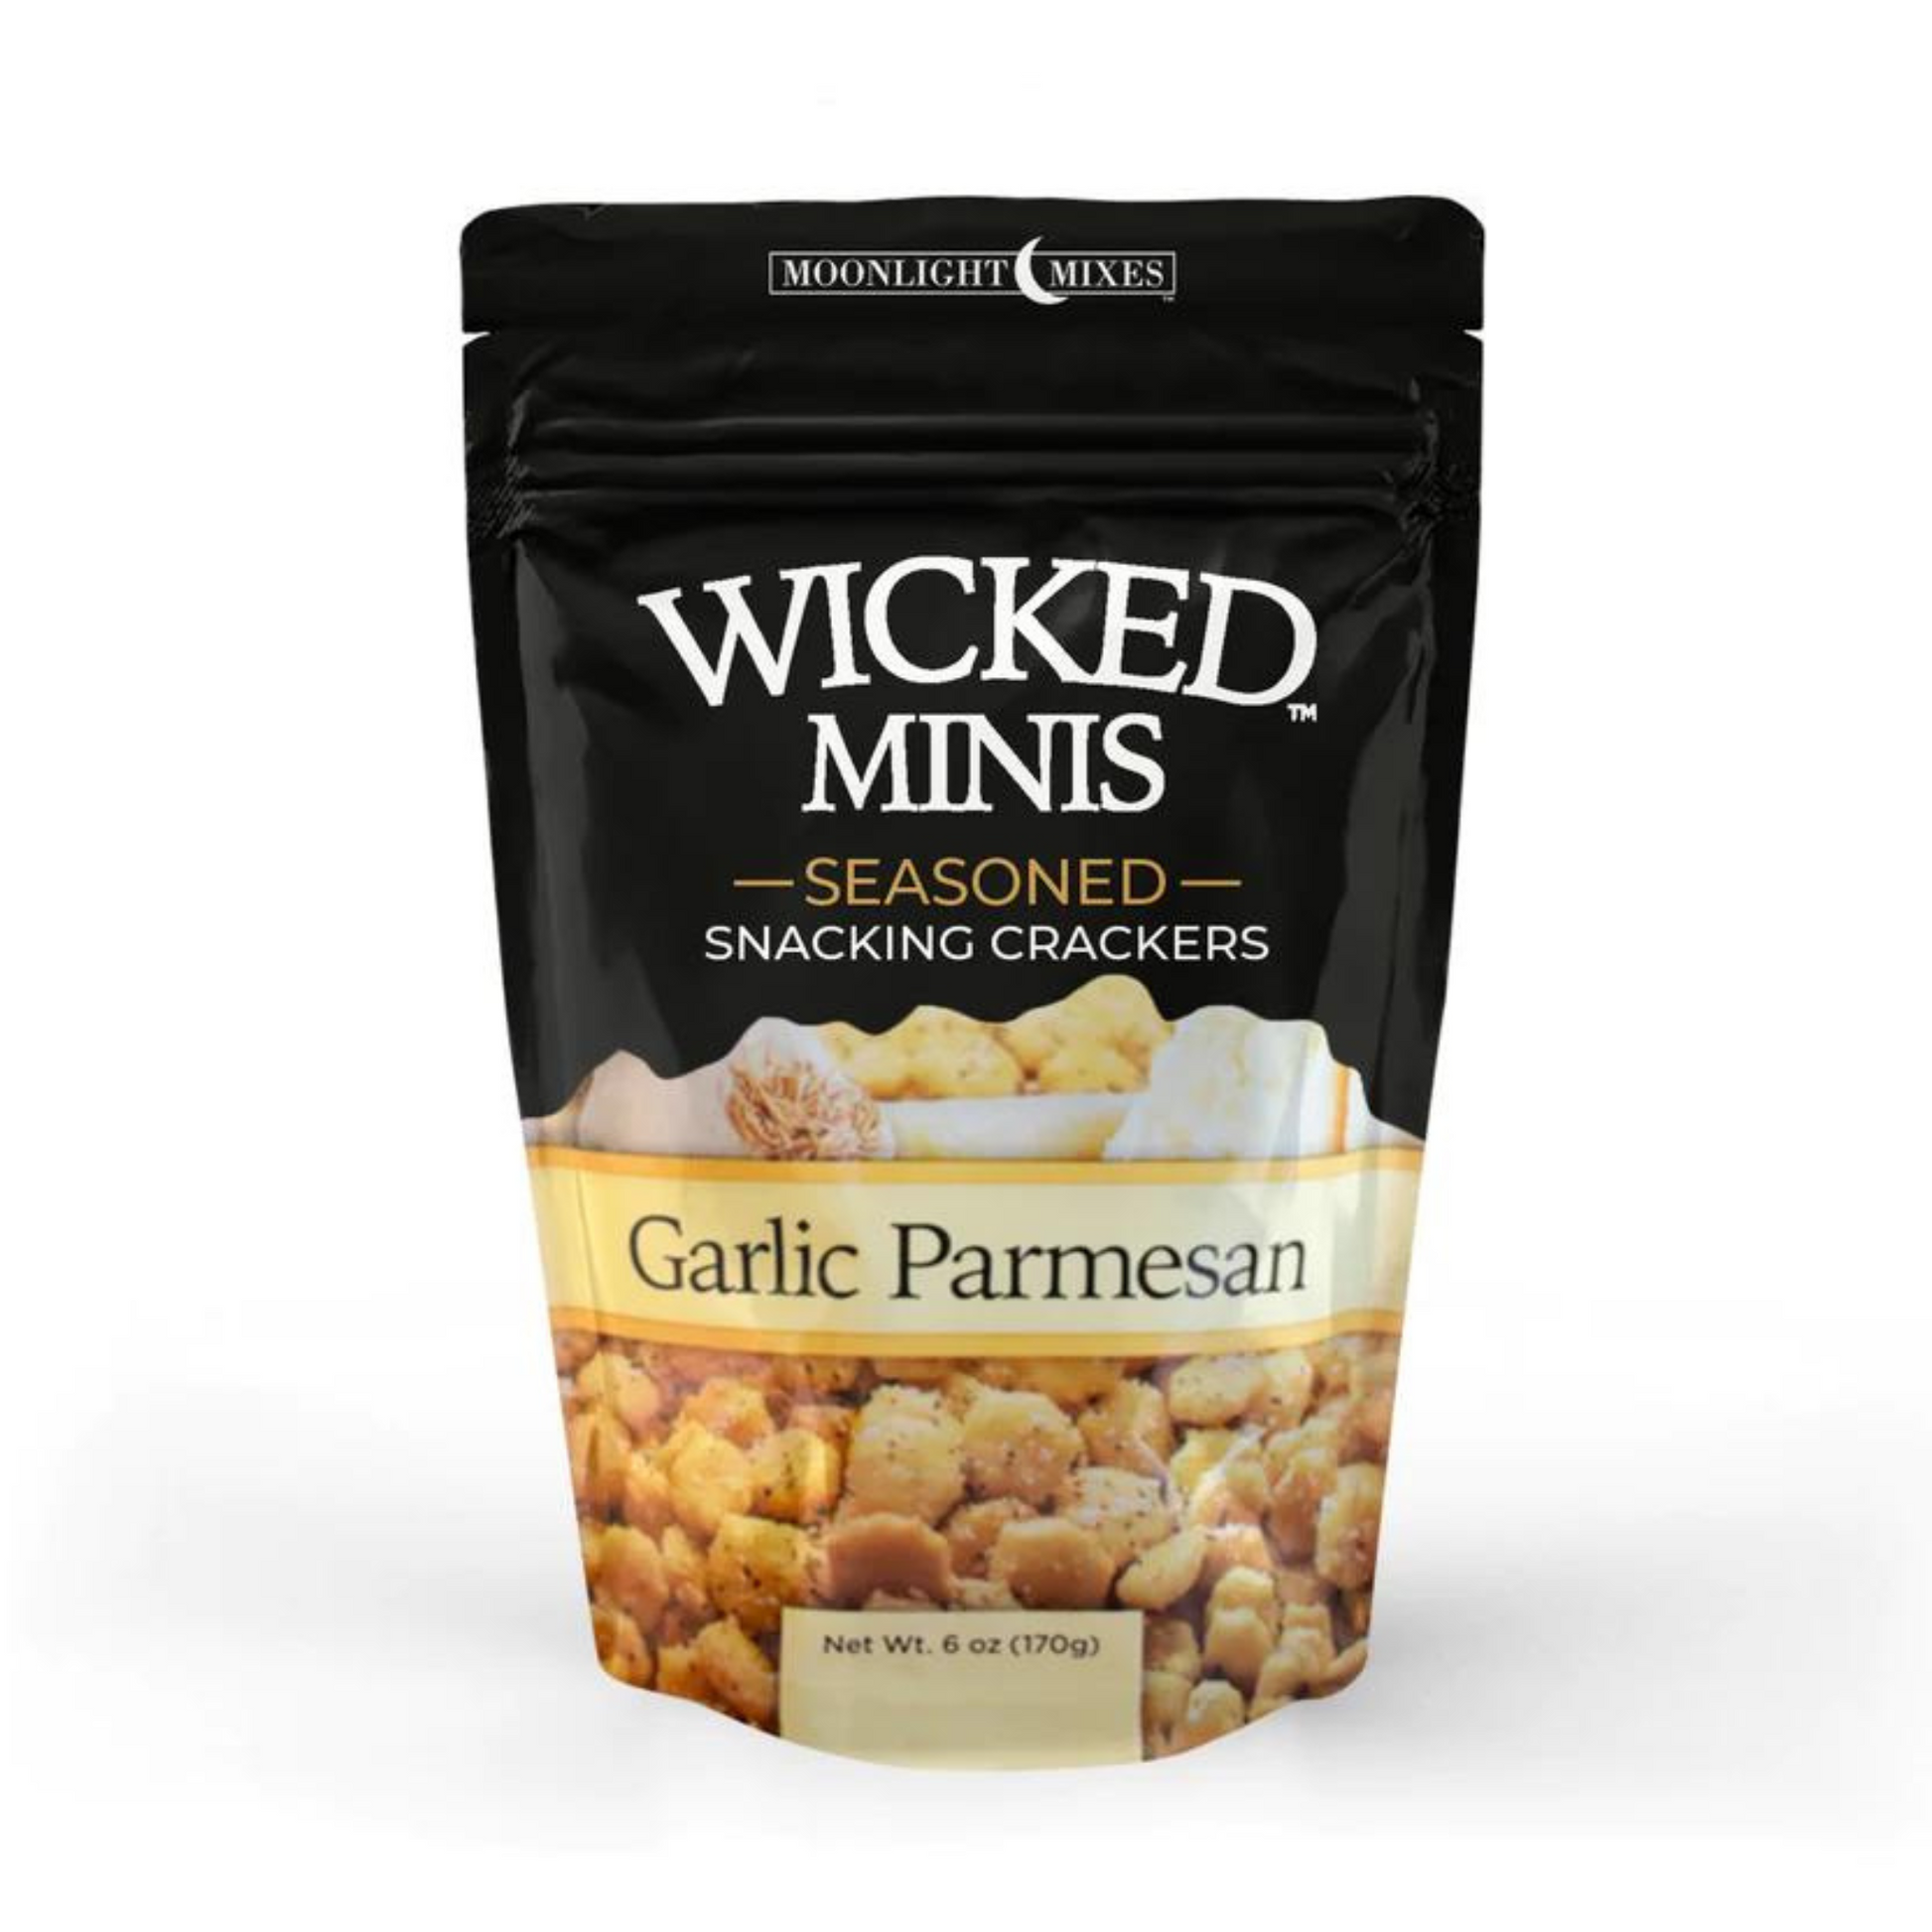 Wicked Minis in Garlic Parmesan